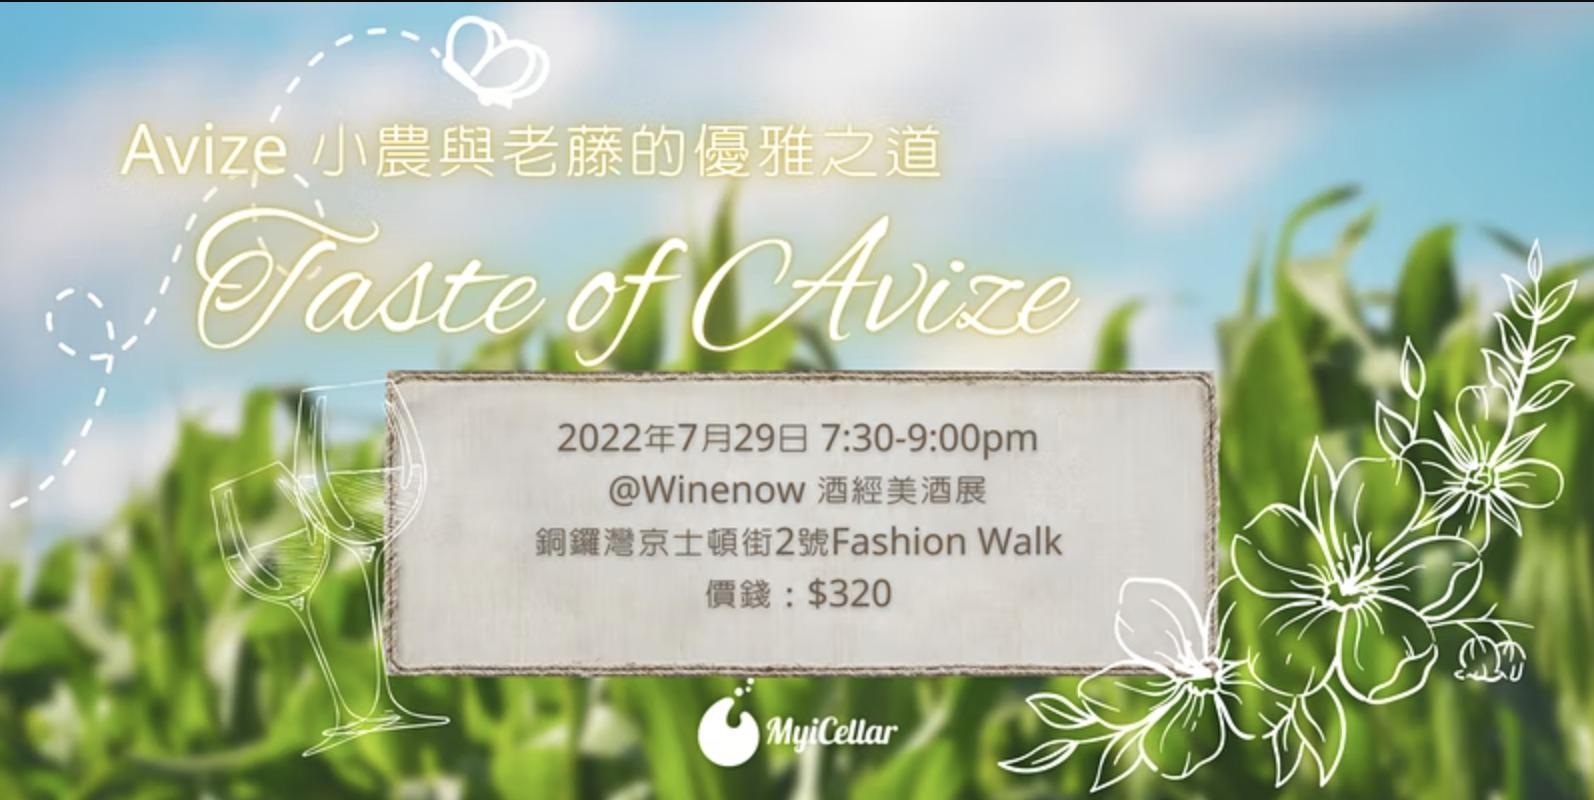 Taste of Avize Champagne 小農與老藤的優雅之道 丨MyiCellar 雲窖 - WineNow HK